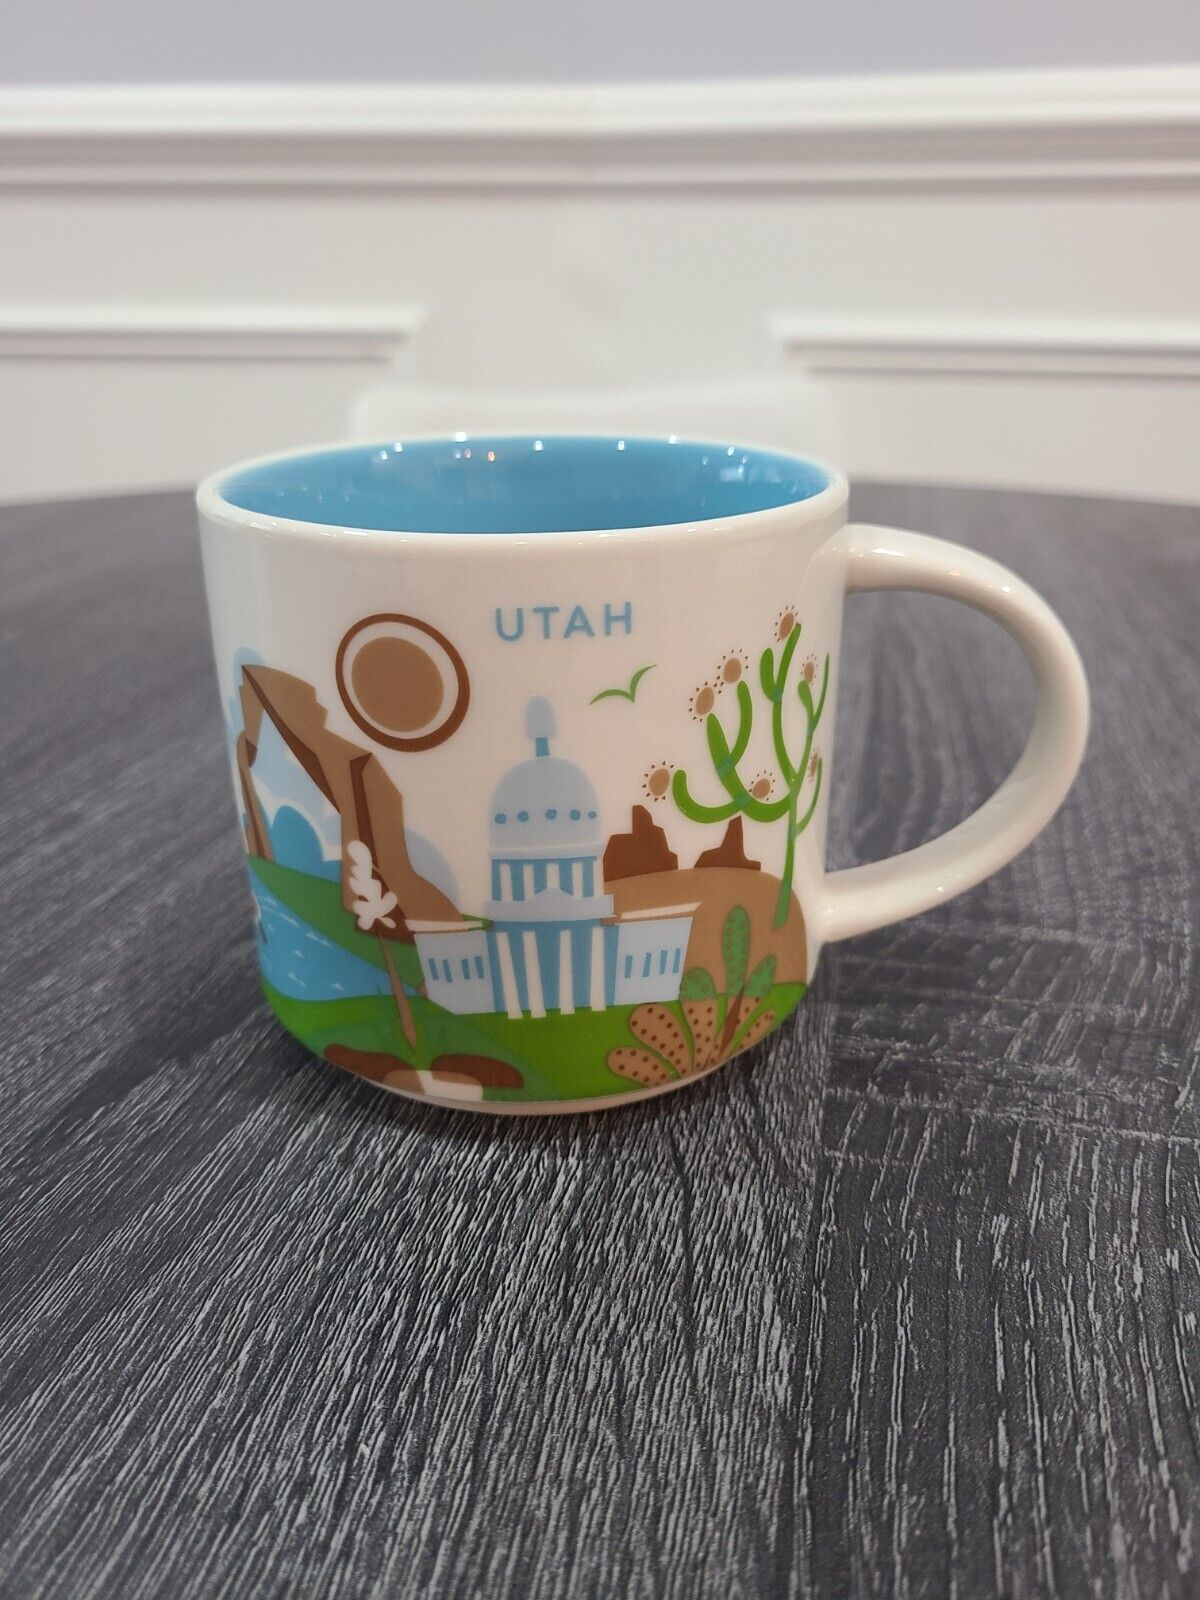 Starbucks You Are Here Utah Mug